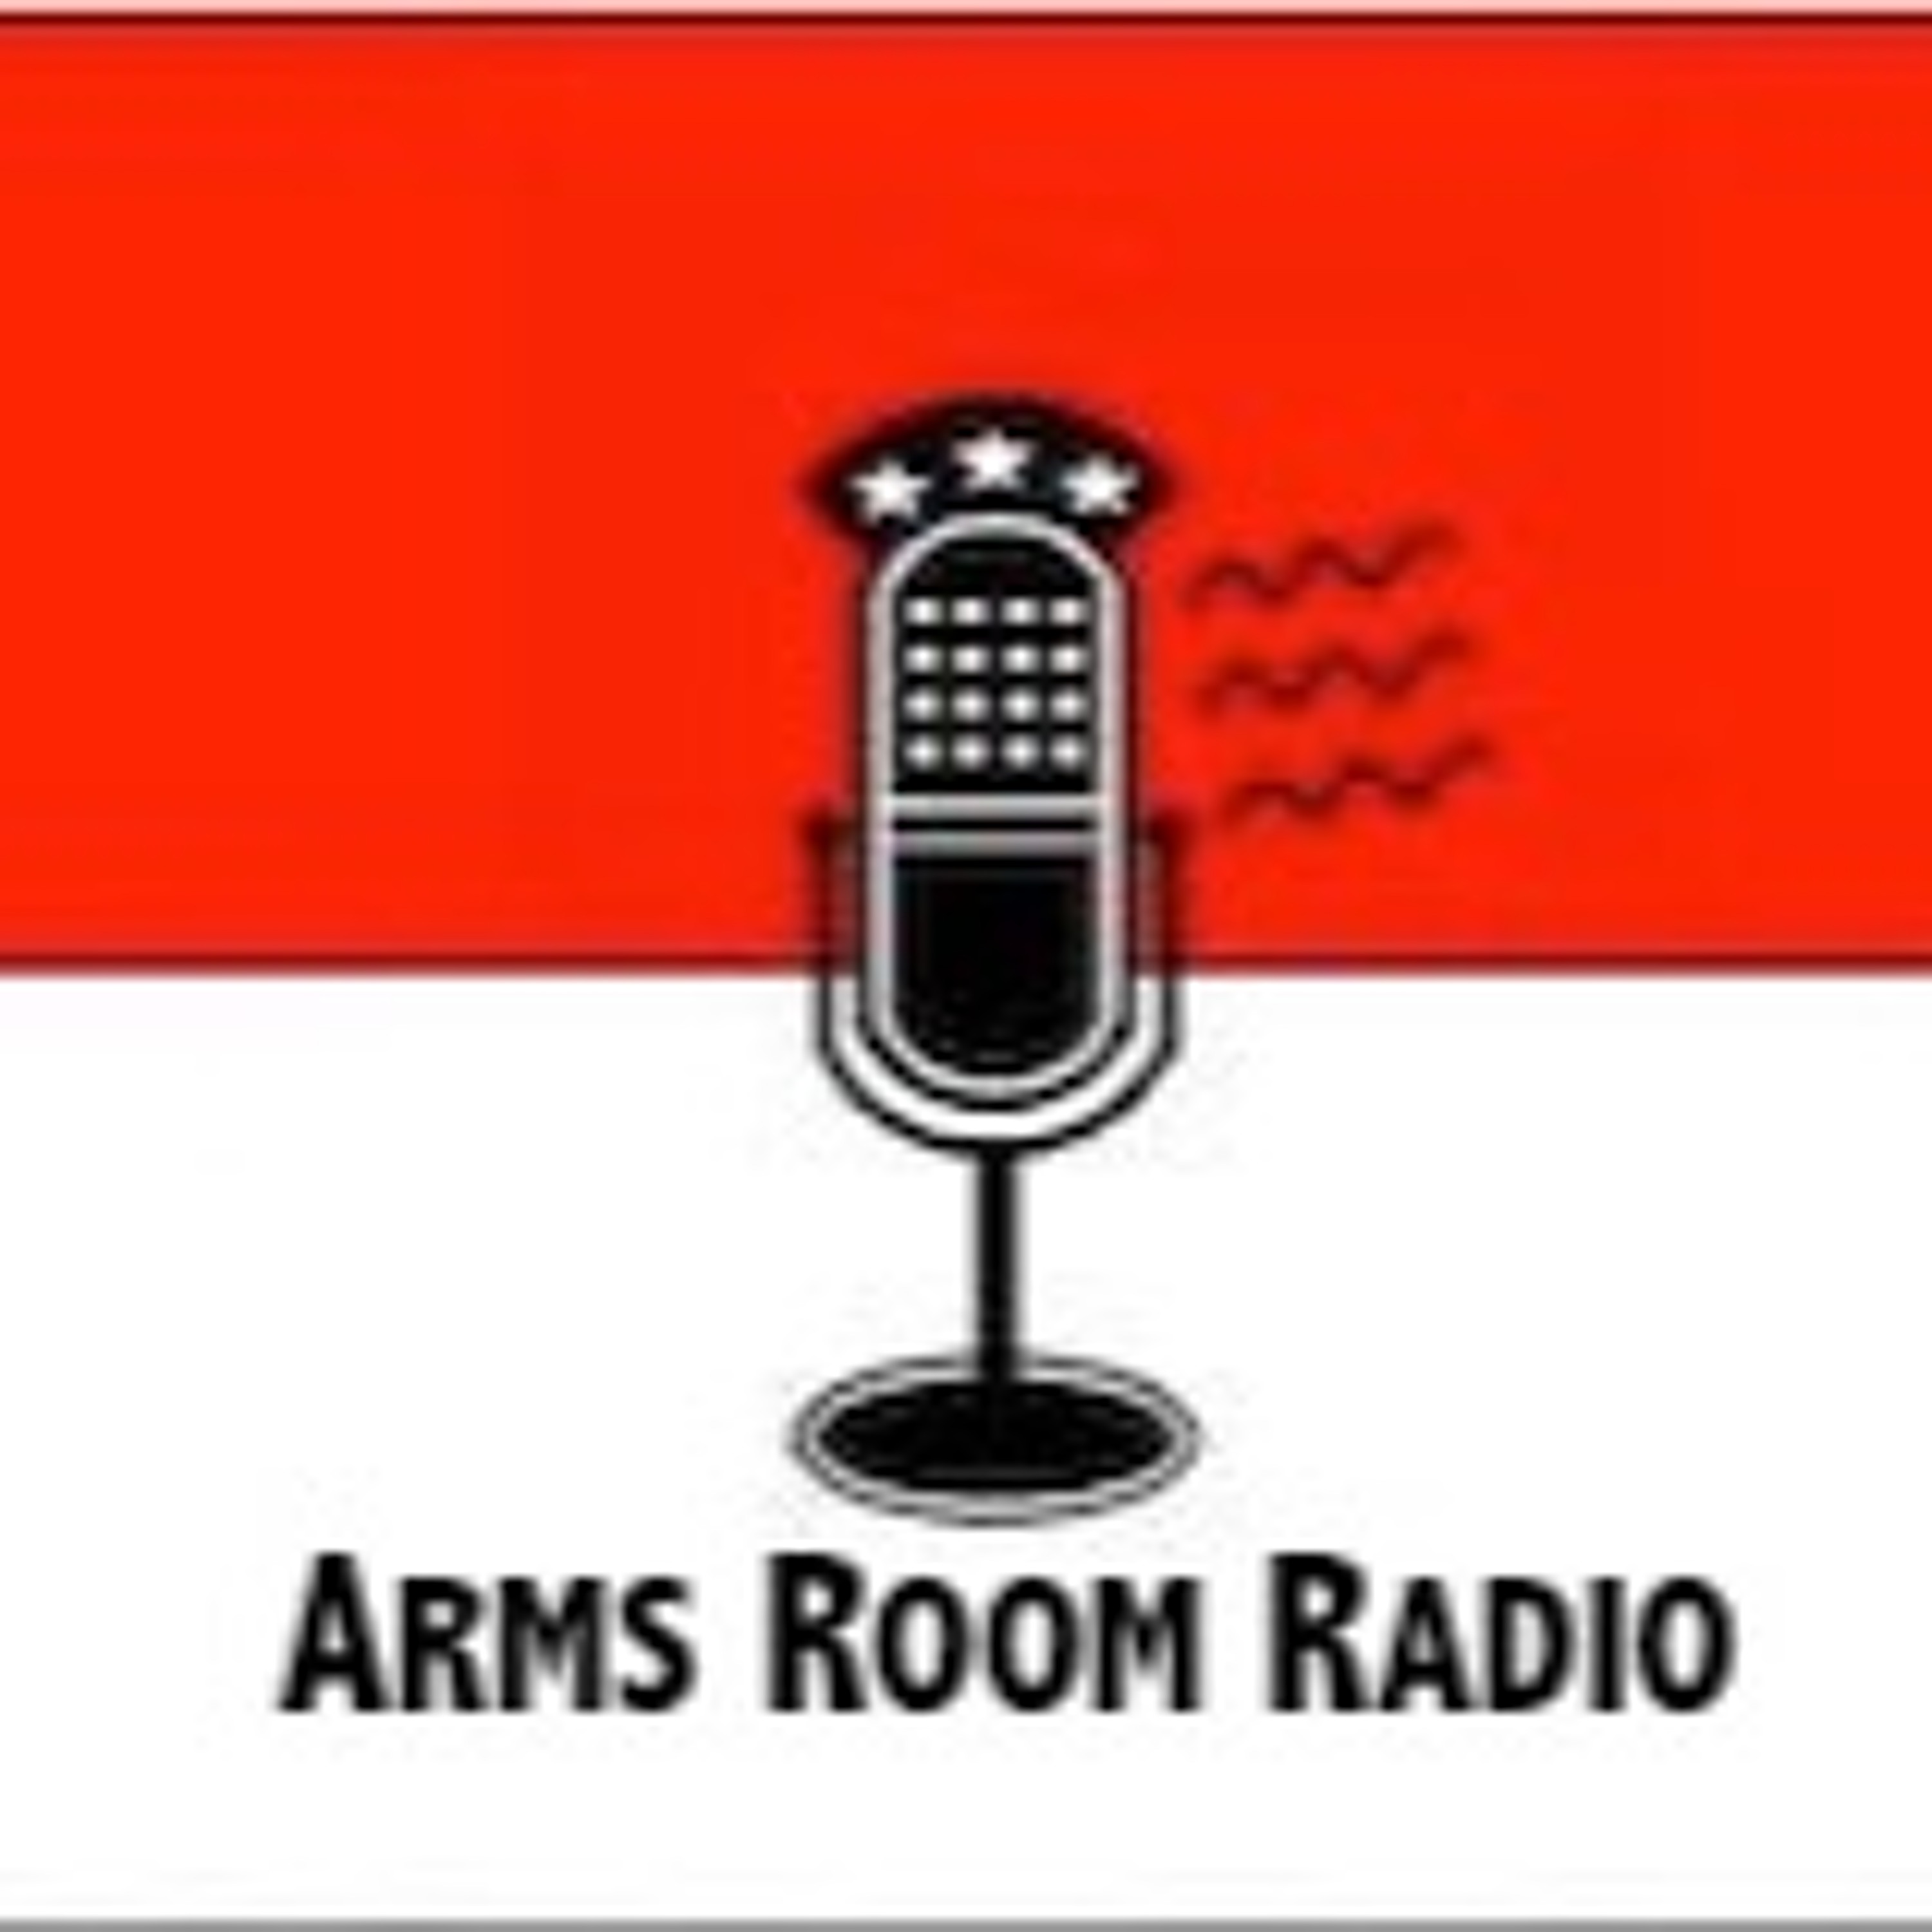 ArmsRoomRadio 12.07.19 Matt Mallory, Booby Trap